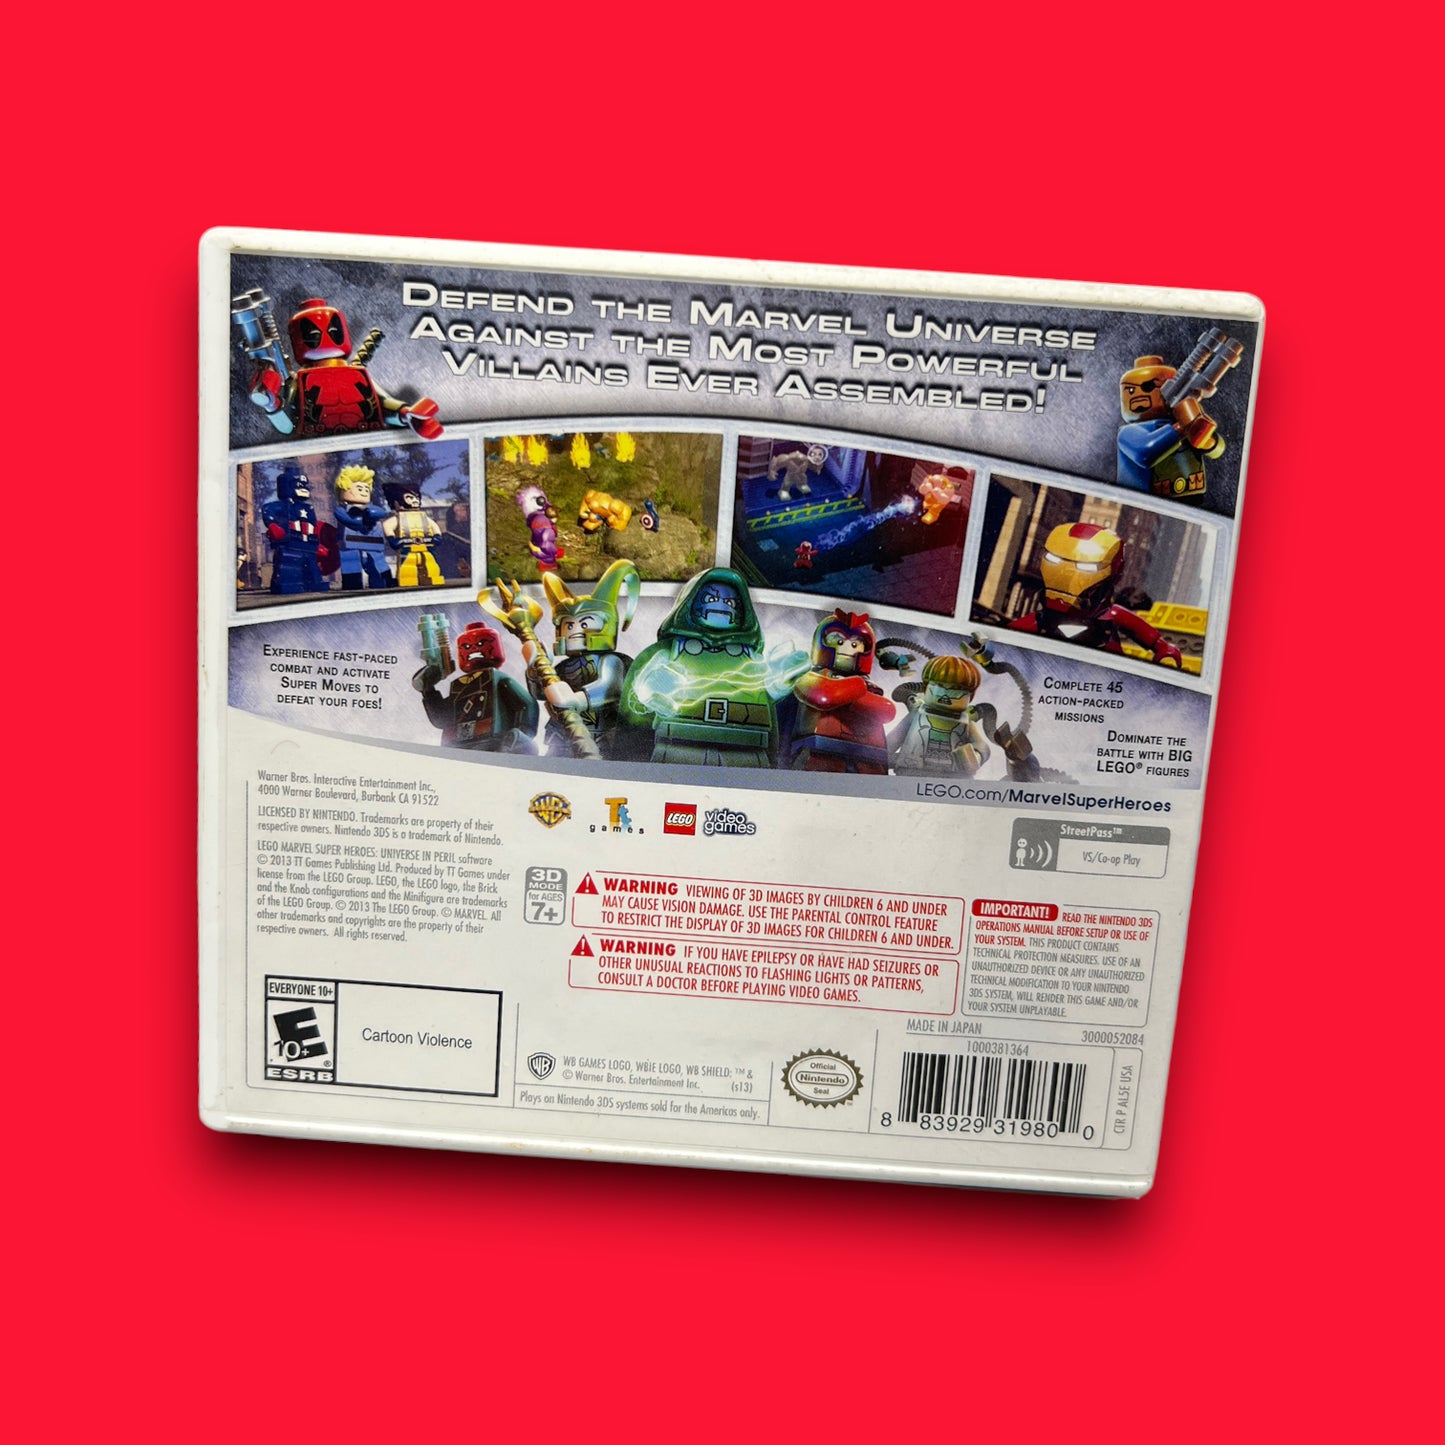 LEGO Marvel Super Heroes: Universe in Peril (Nintendo 3DS, 2013)